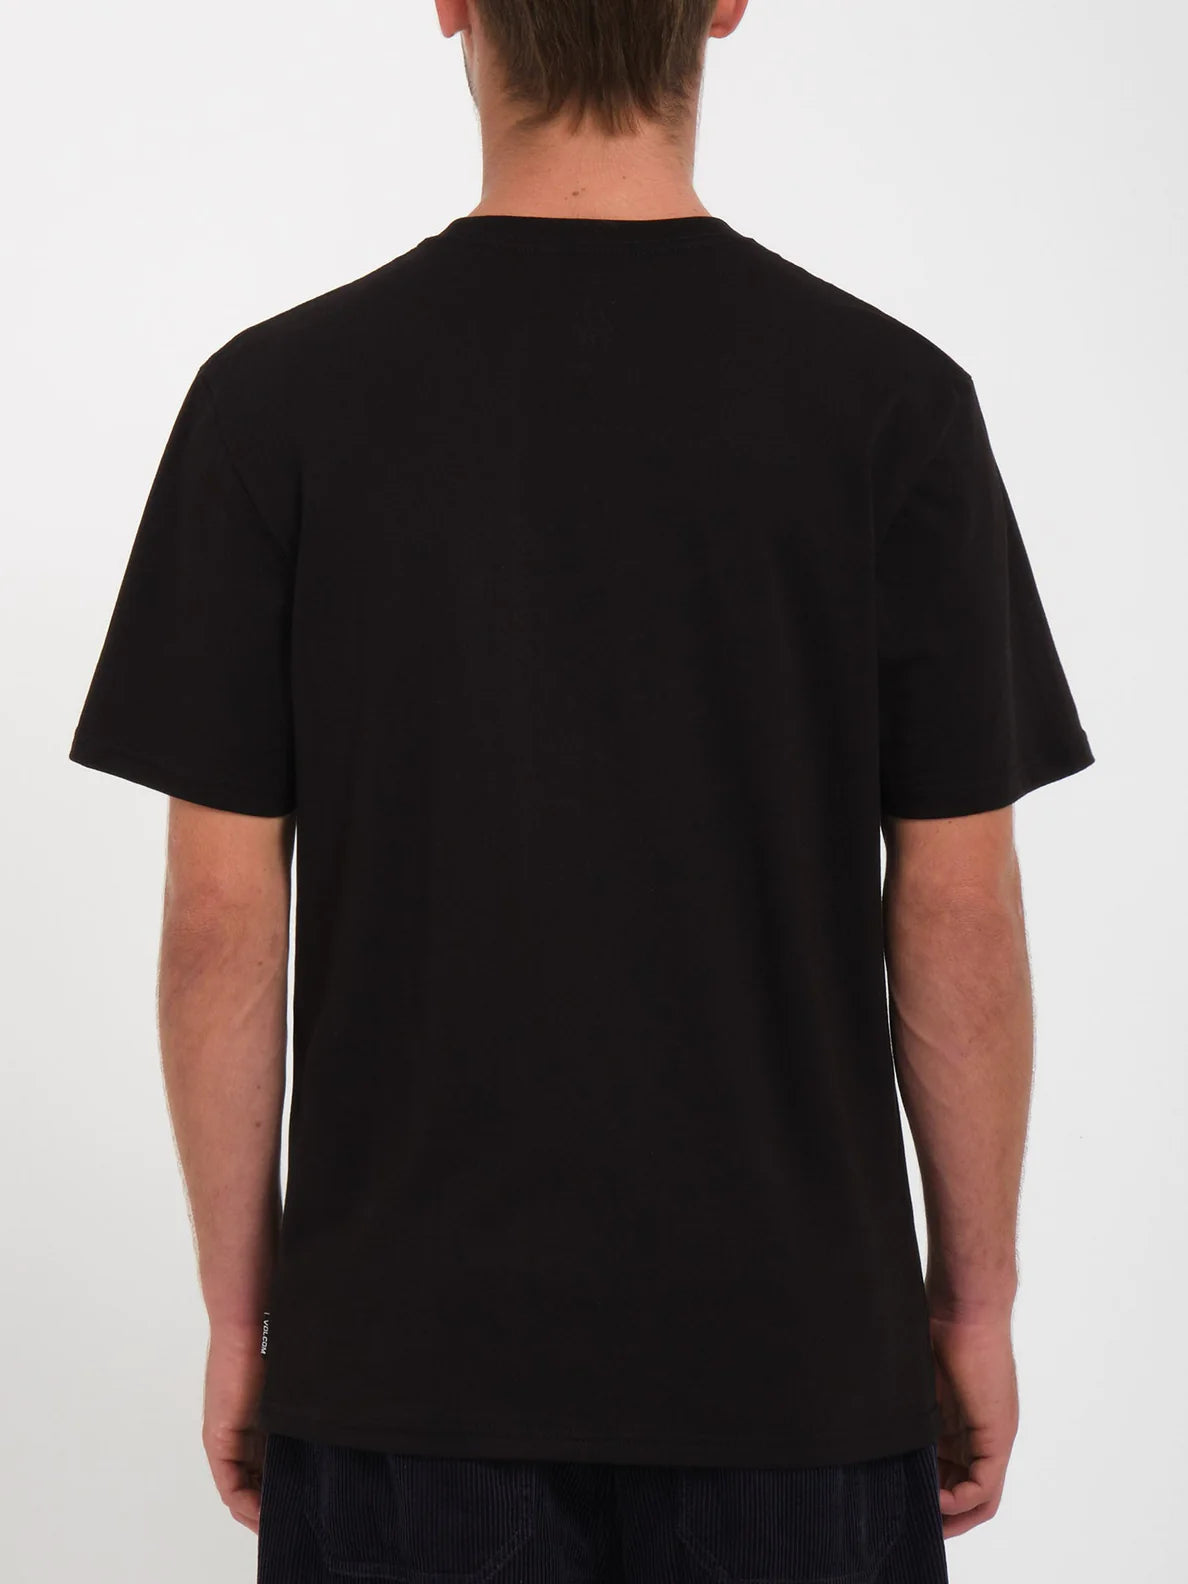 Camiseta Volcom Max Sherman 1 - Black | Camisetas de hombre | Camisetas manga corta de hombre | Volcom Shop | surfdevils.com